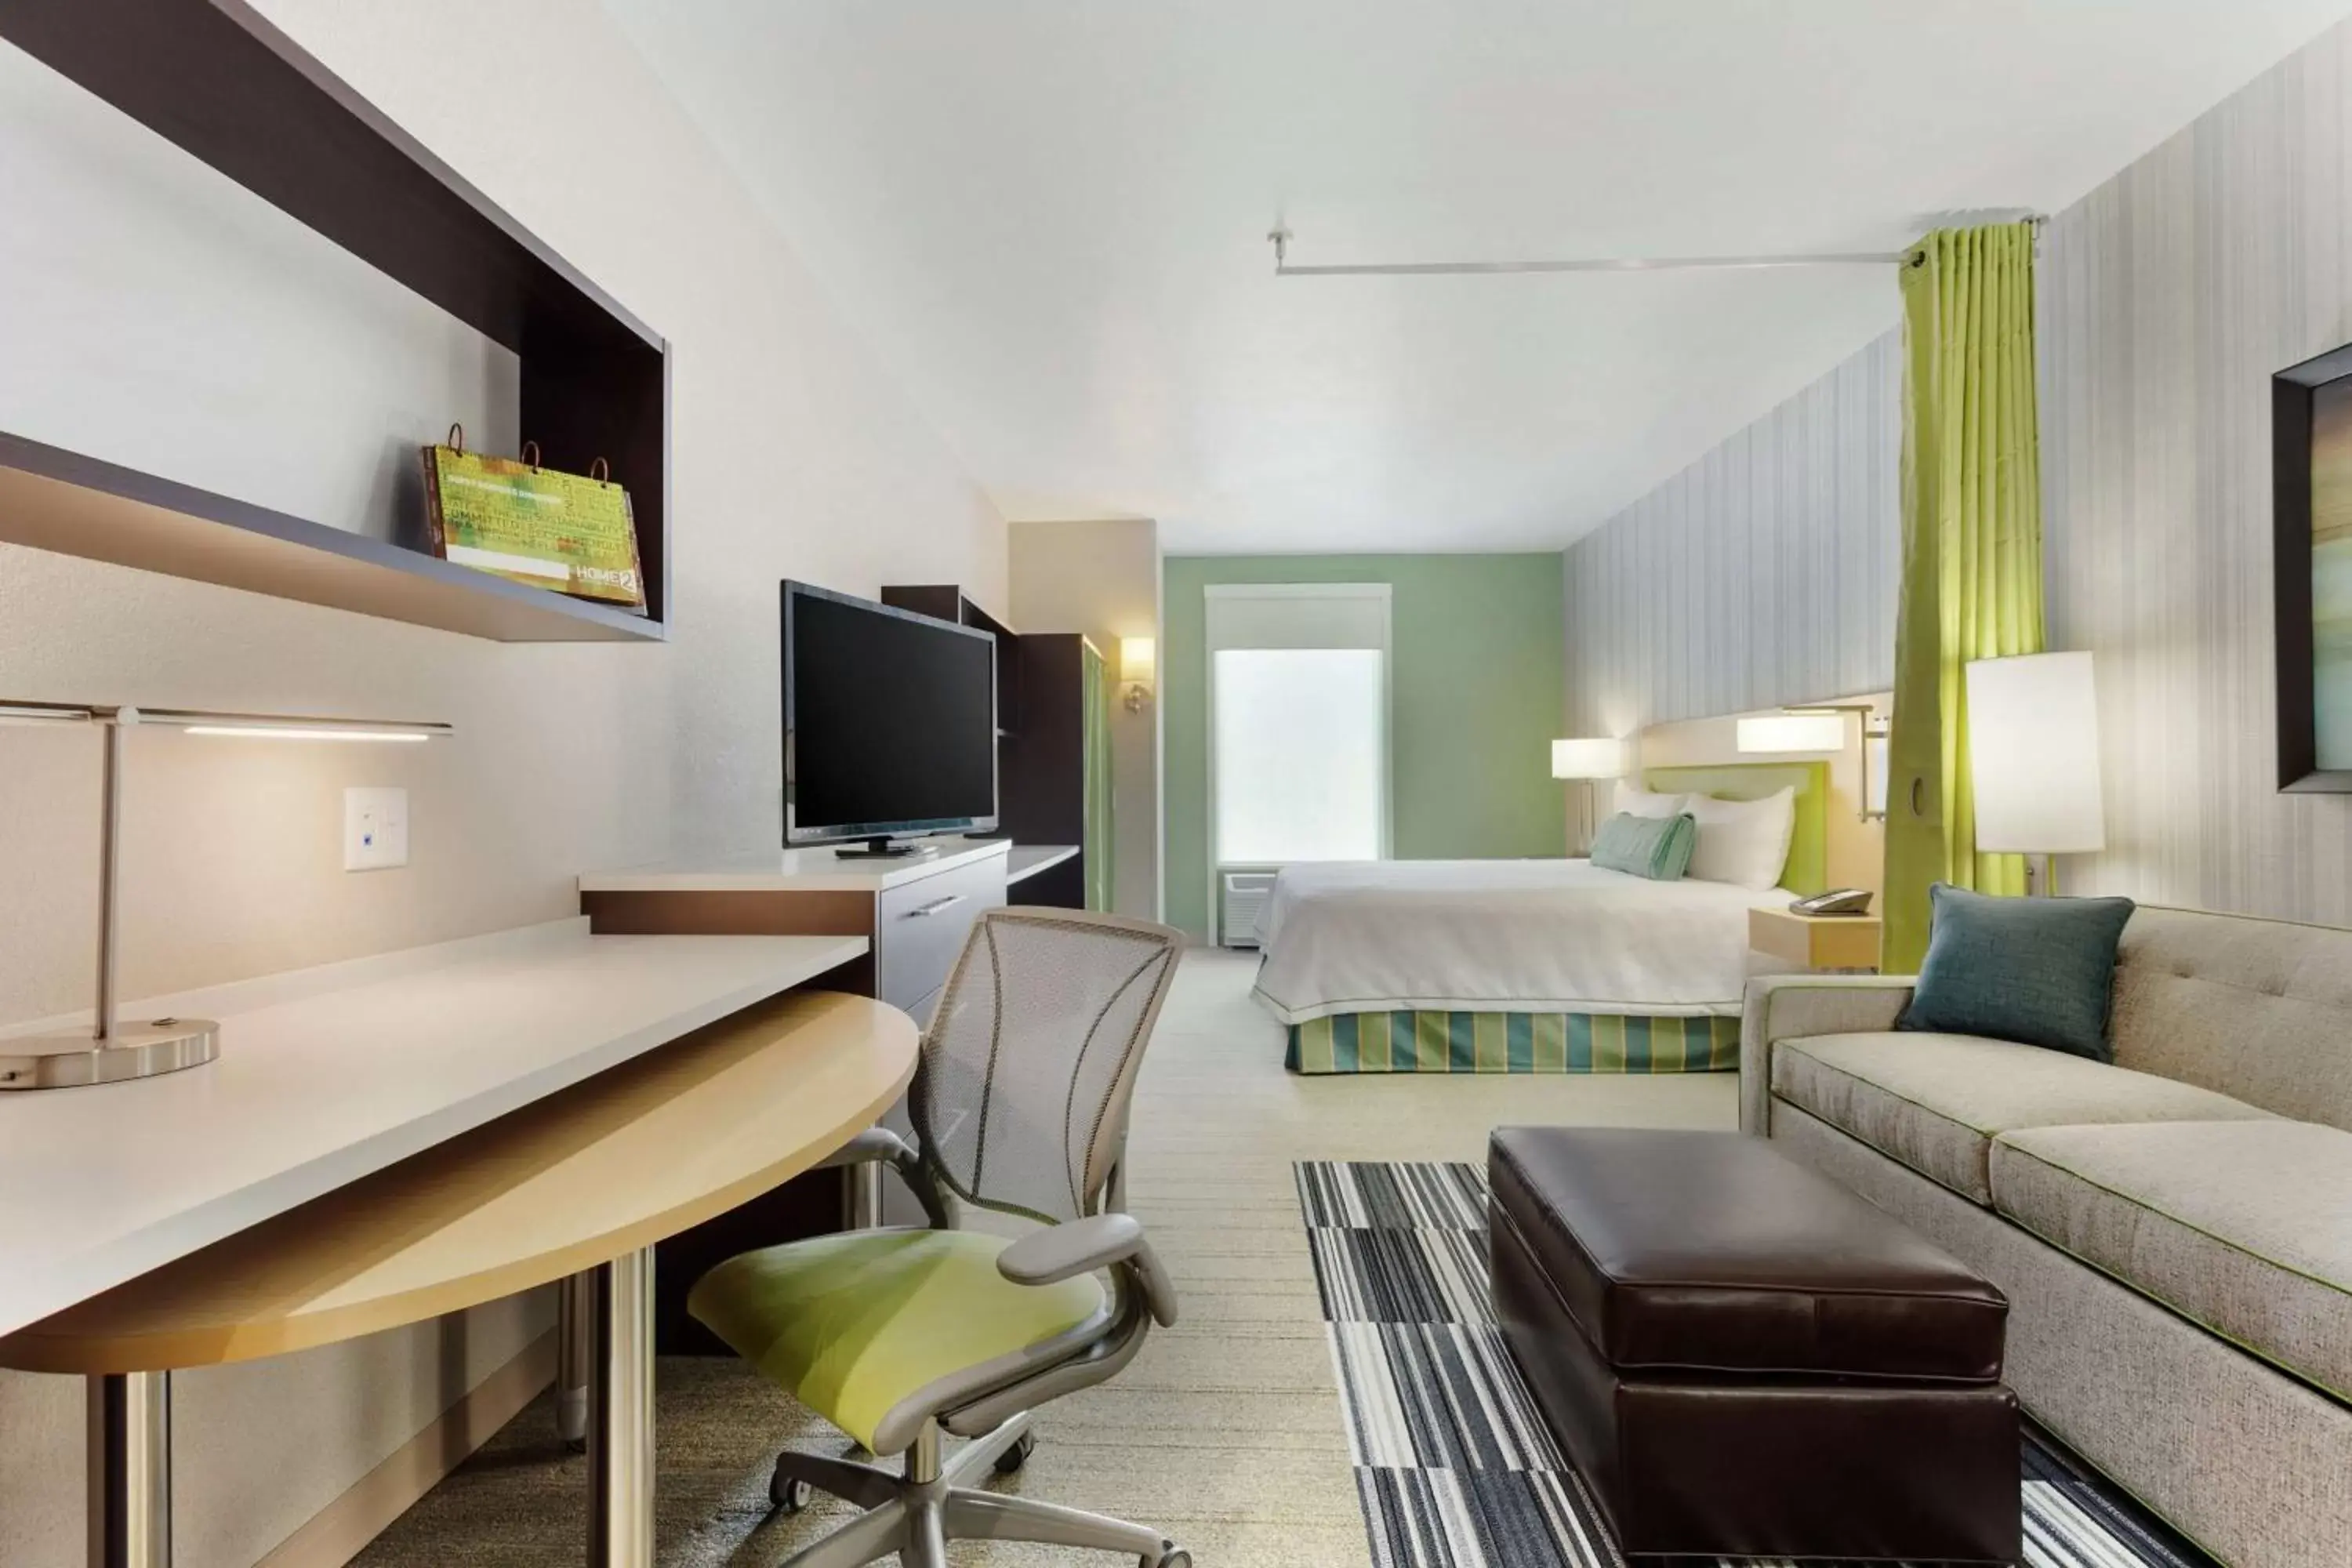 Bedroom, TV/Entertainment Center in Home2 Suites by Hilton Salt Lake City-Murray, UT